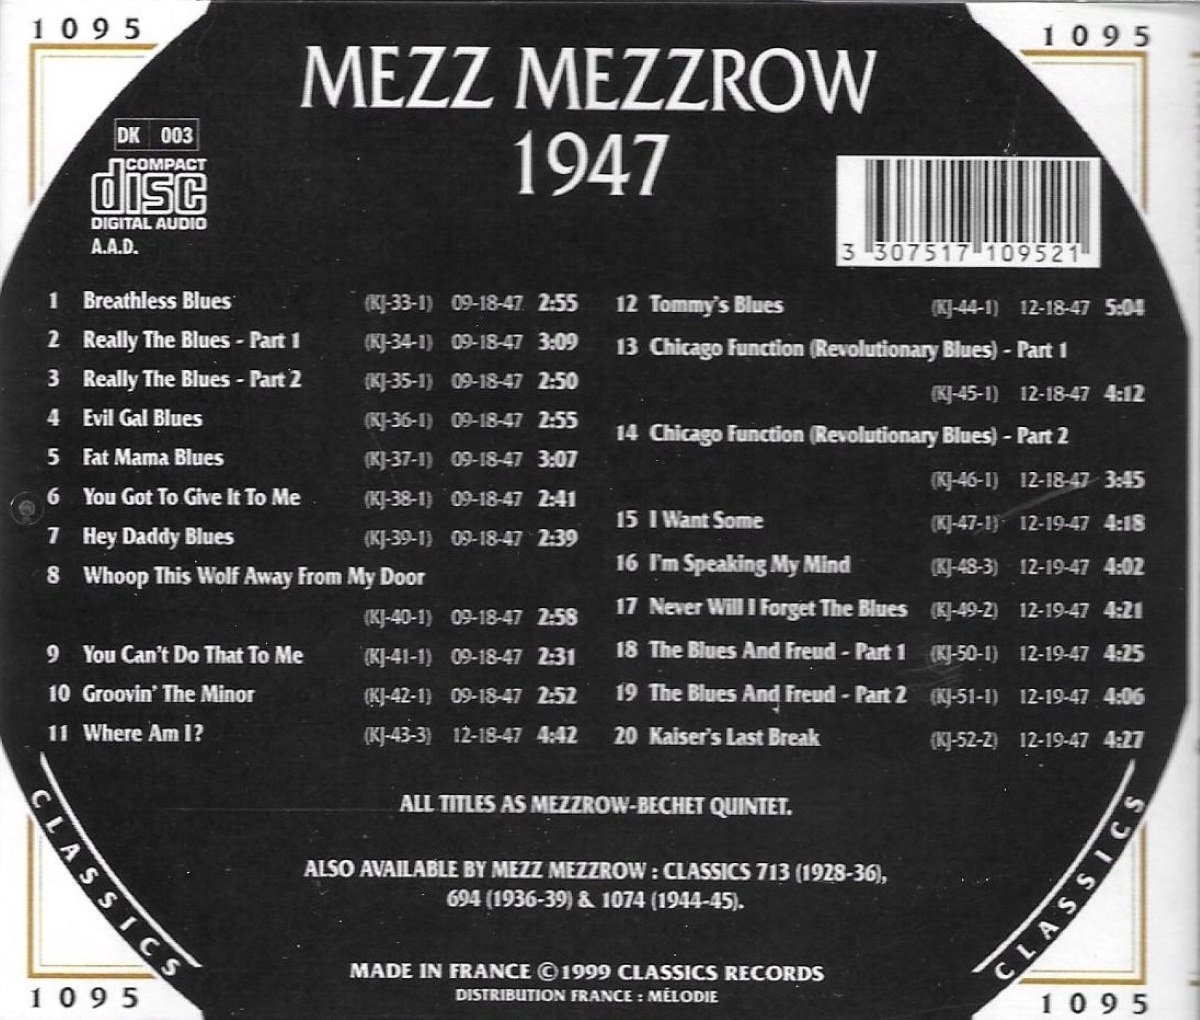 The Chronological Mezz Mezzrow-1947